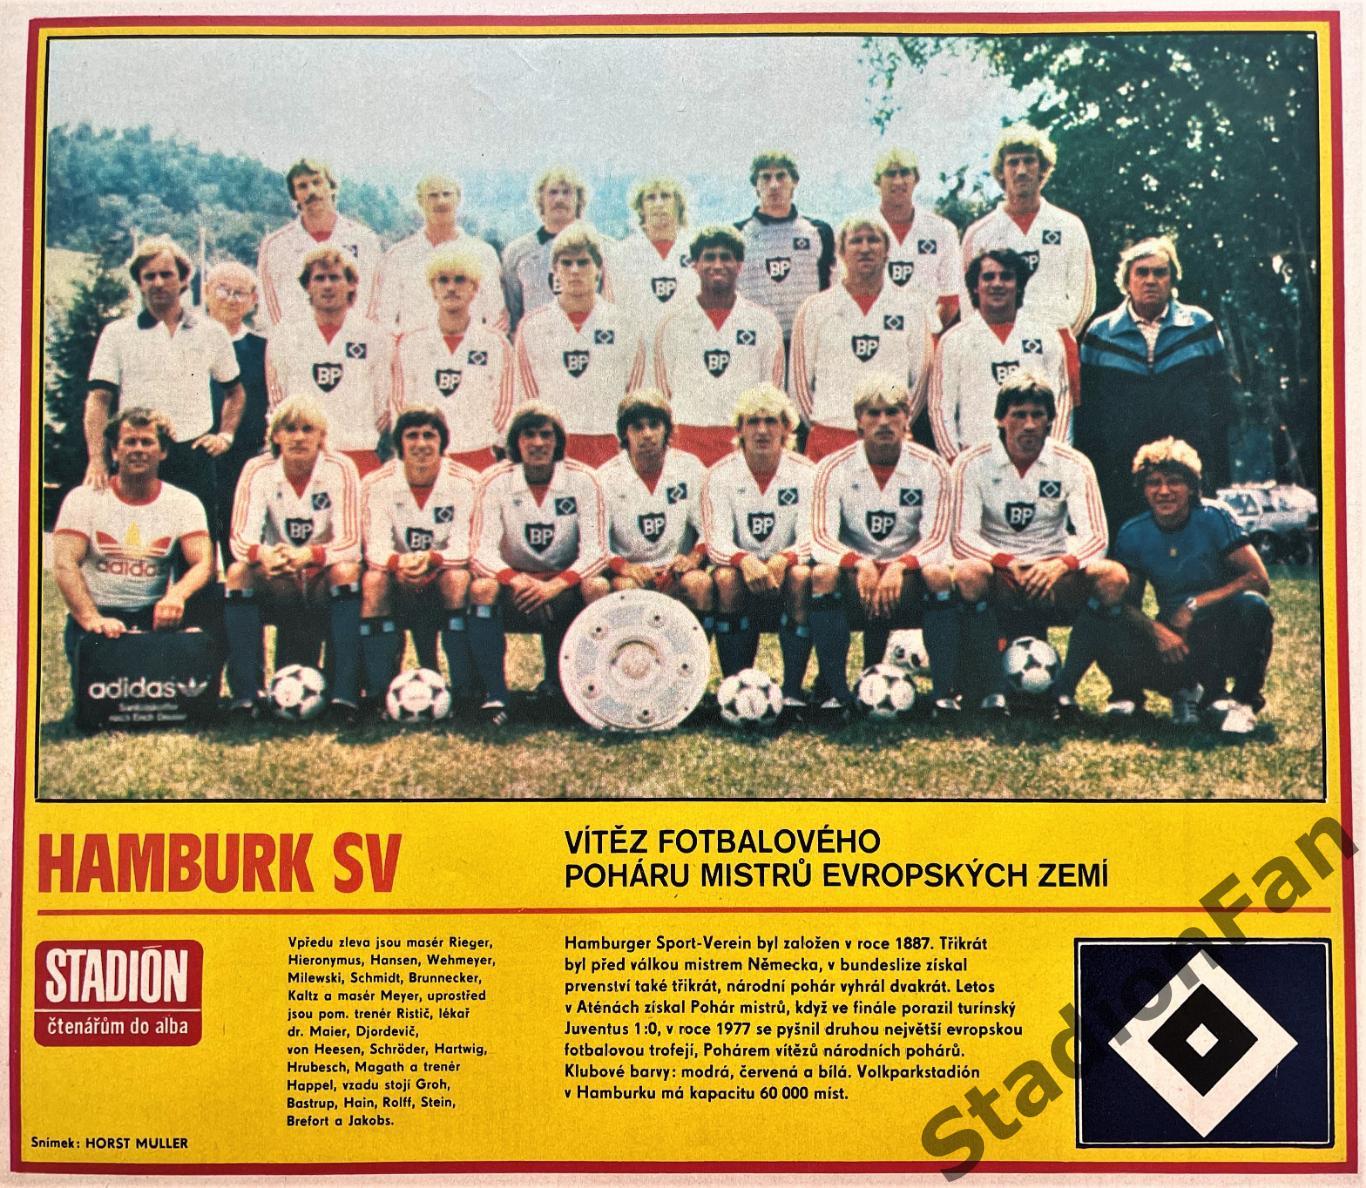 Постер из журнала Стадион (Stadion) - Hamburk, 1983.